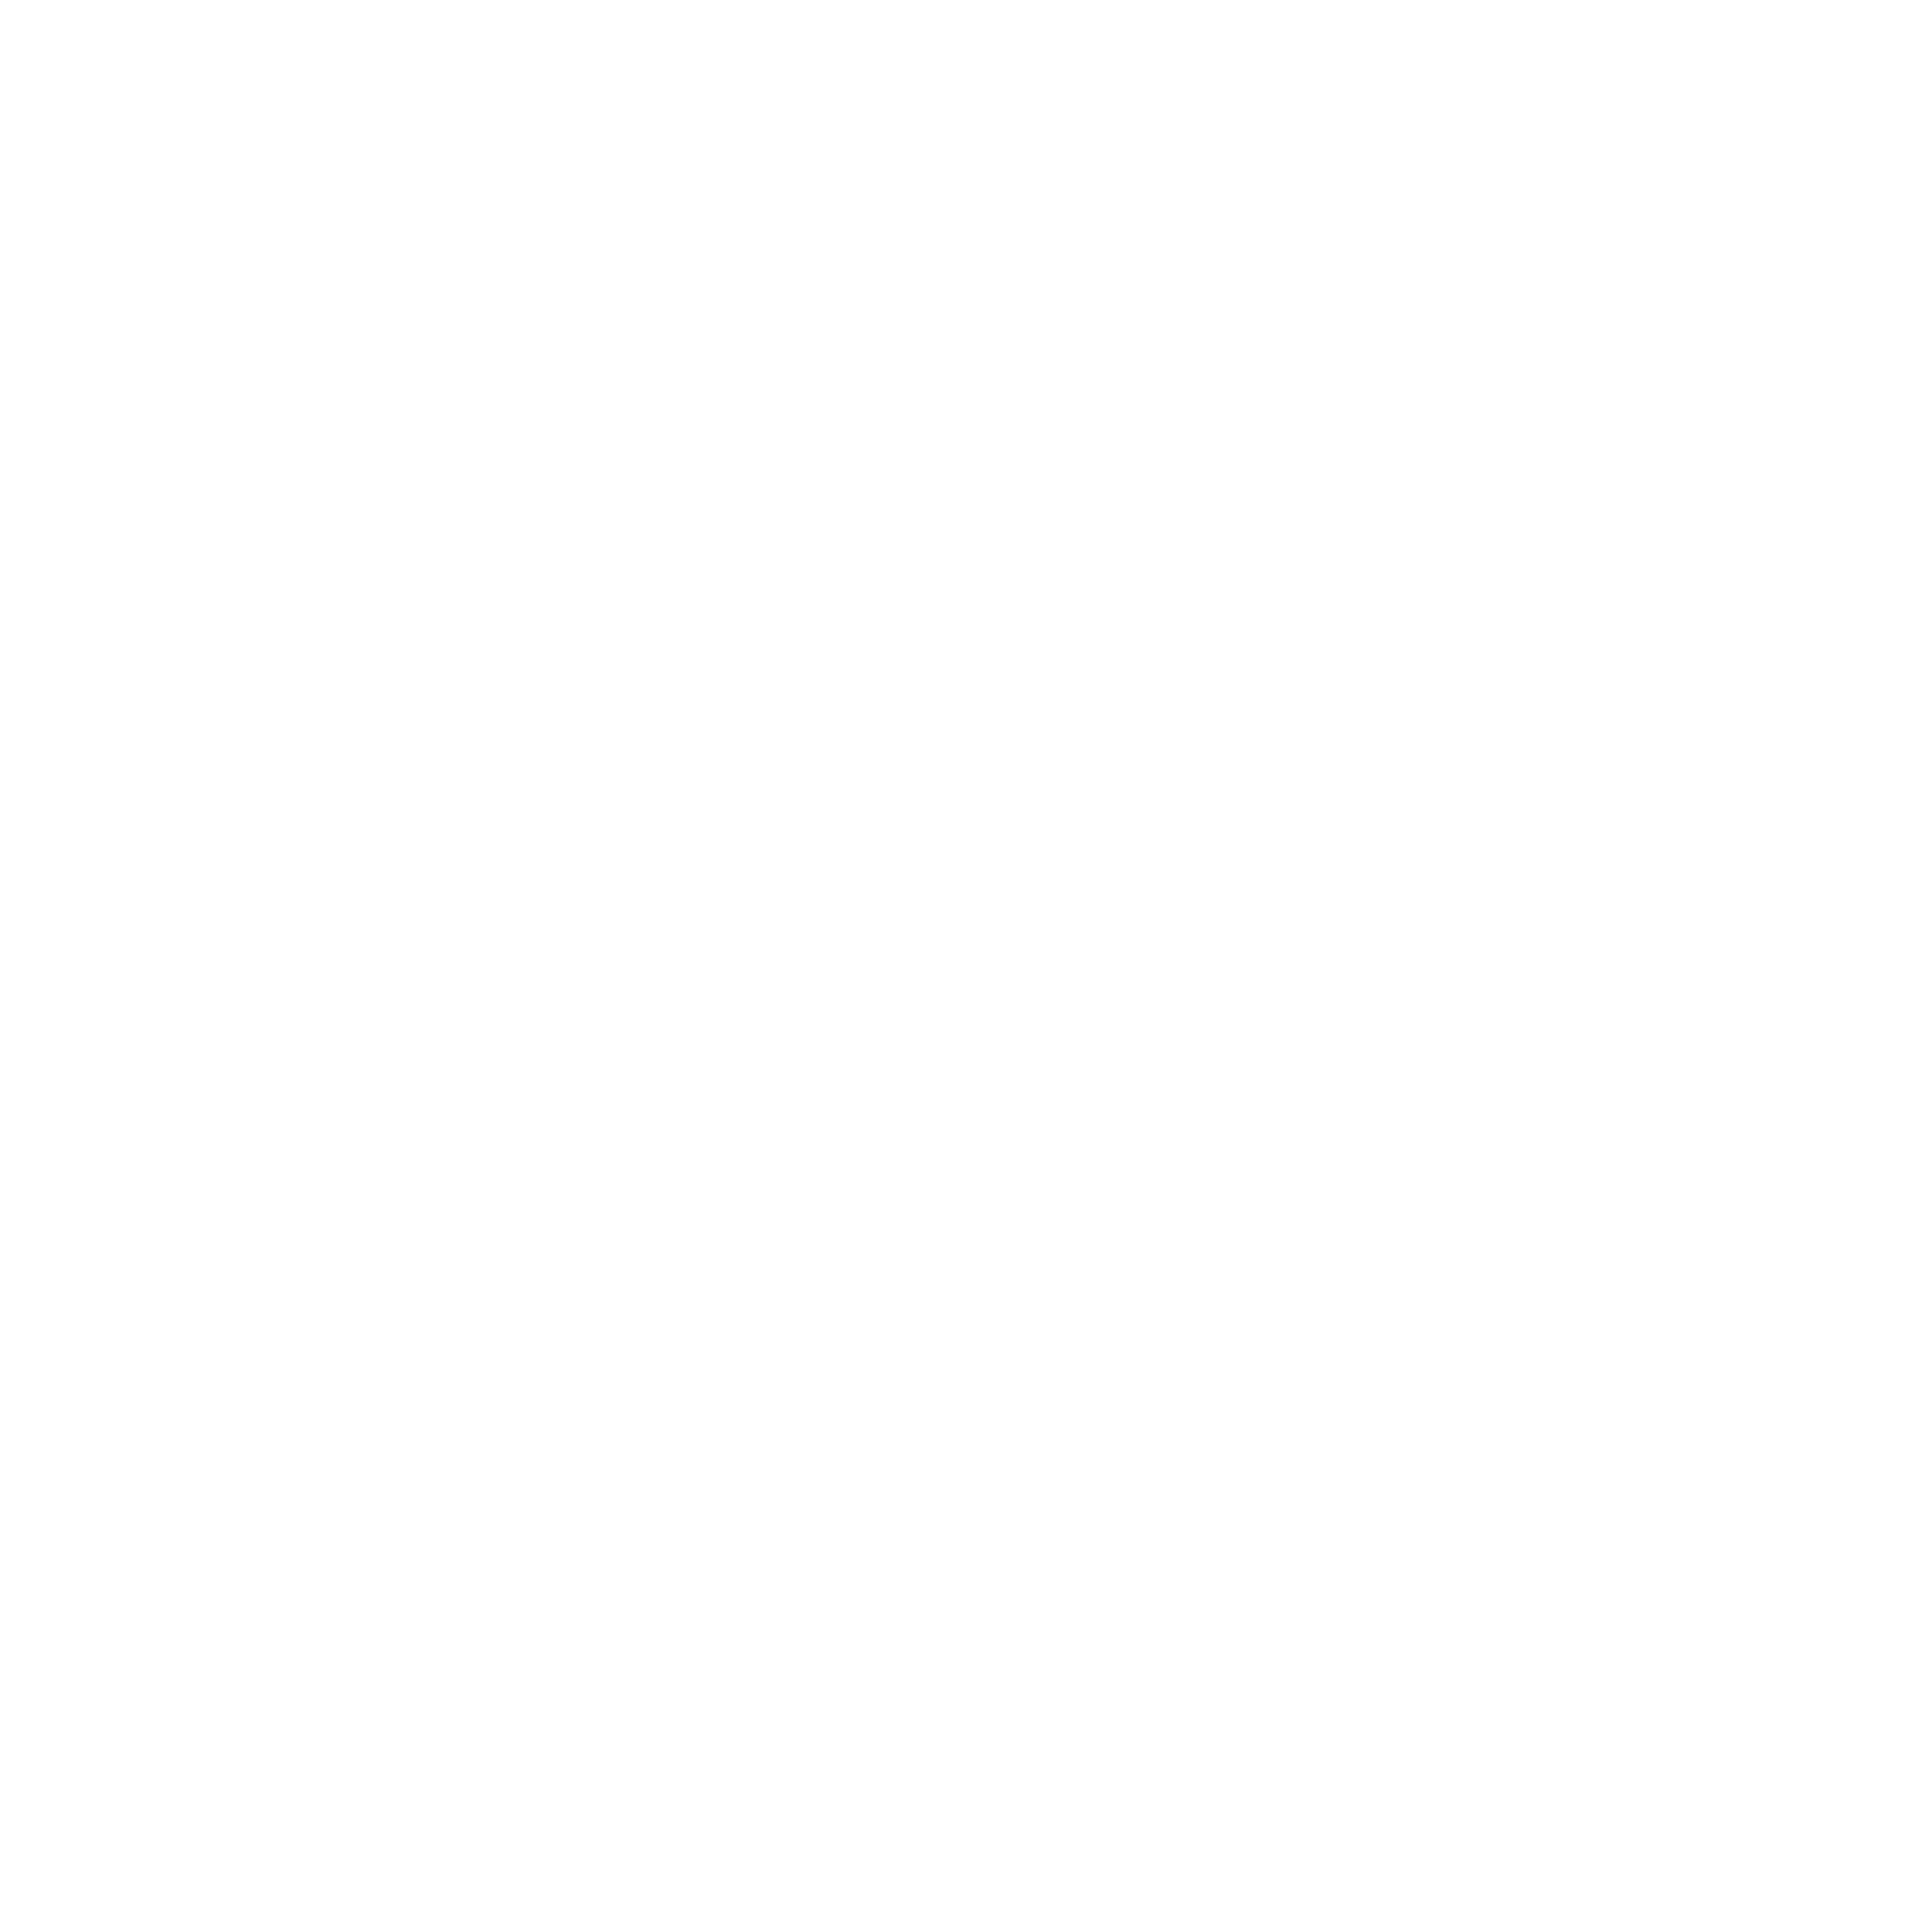 Covid safe logo